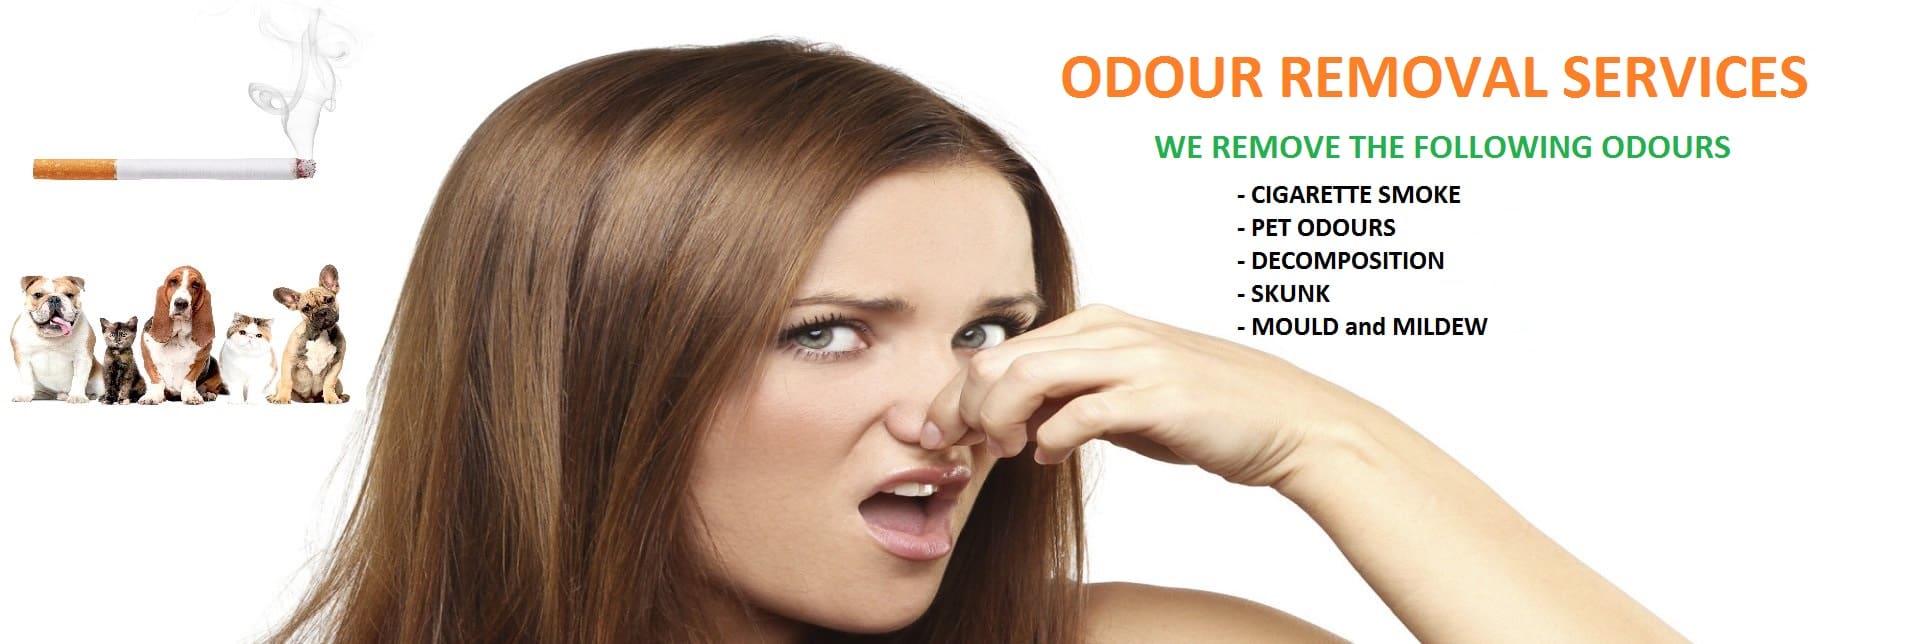 odour removal services ottawa